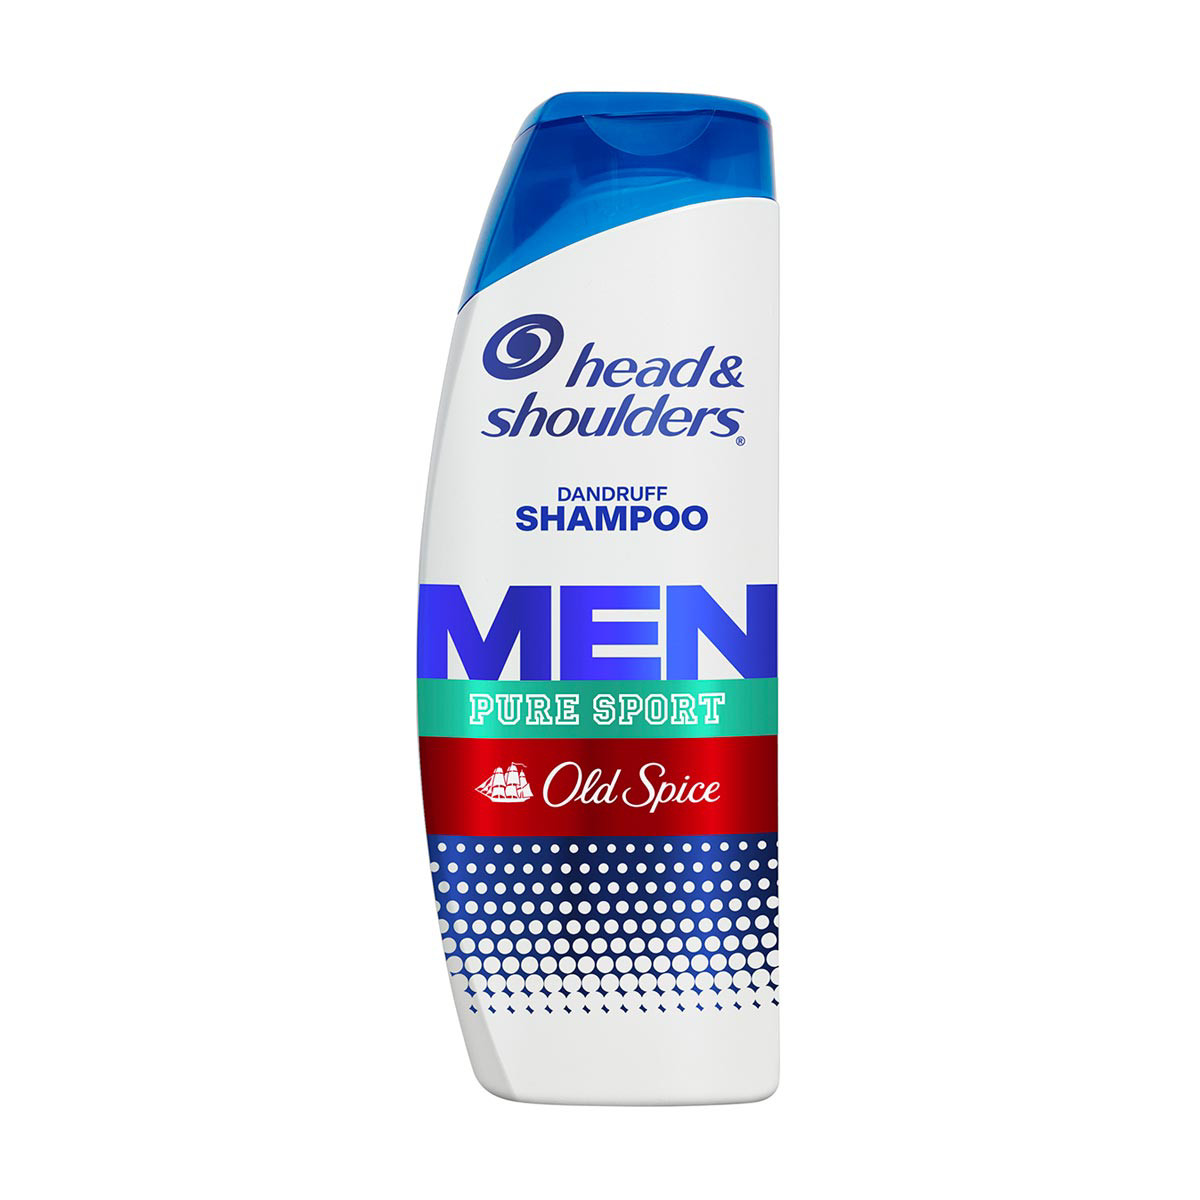 Head & Shoulders Men's Shampoo Pure Sport, Old Spice, 12.5 oz